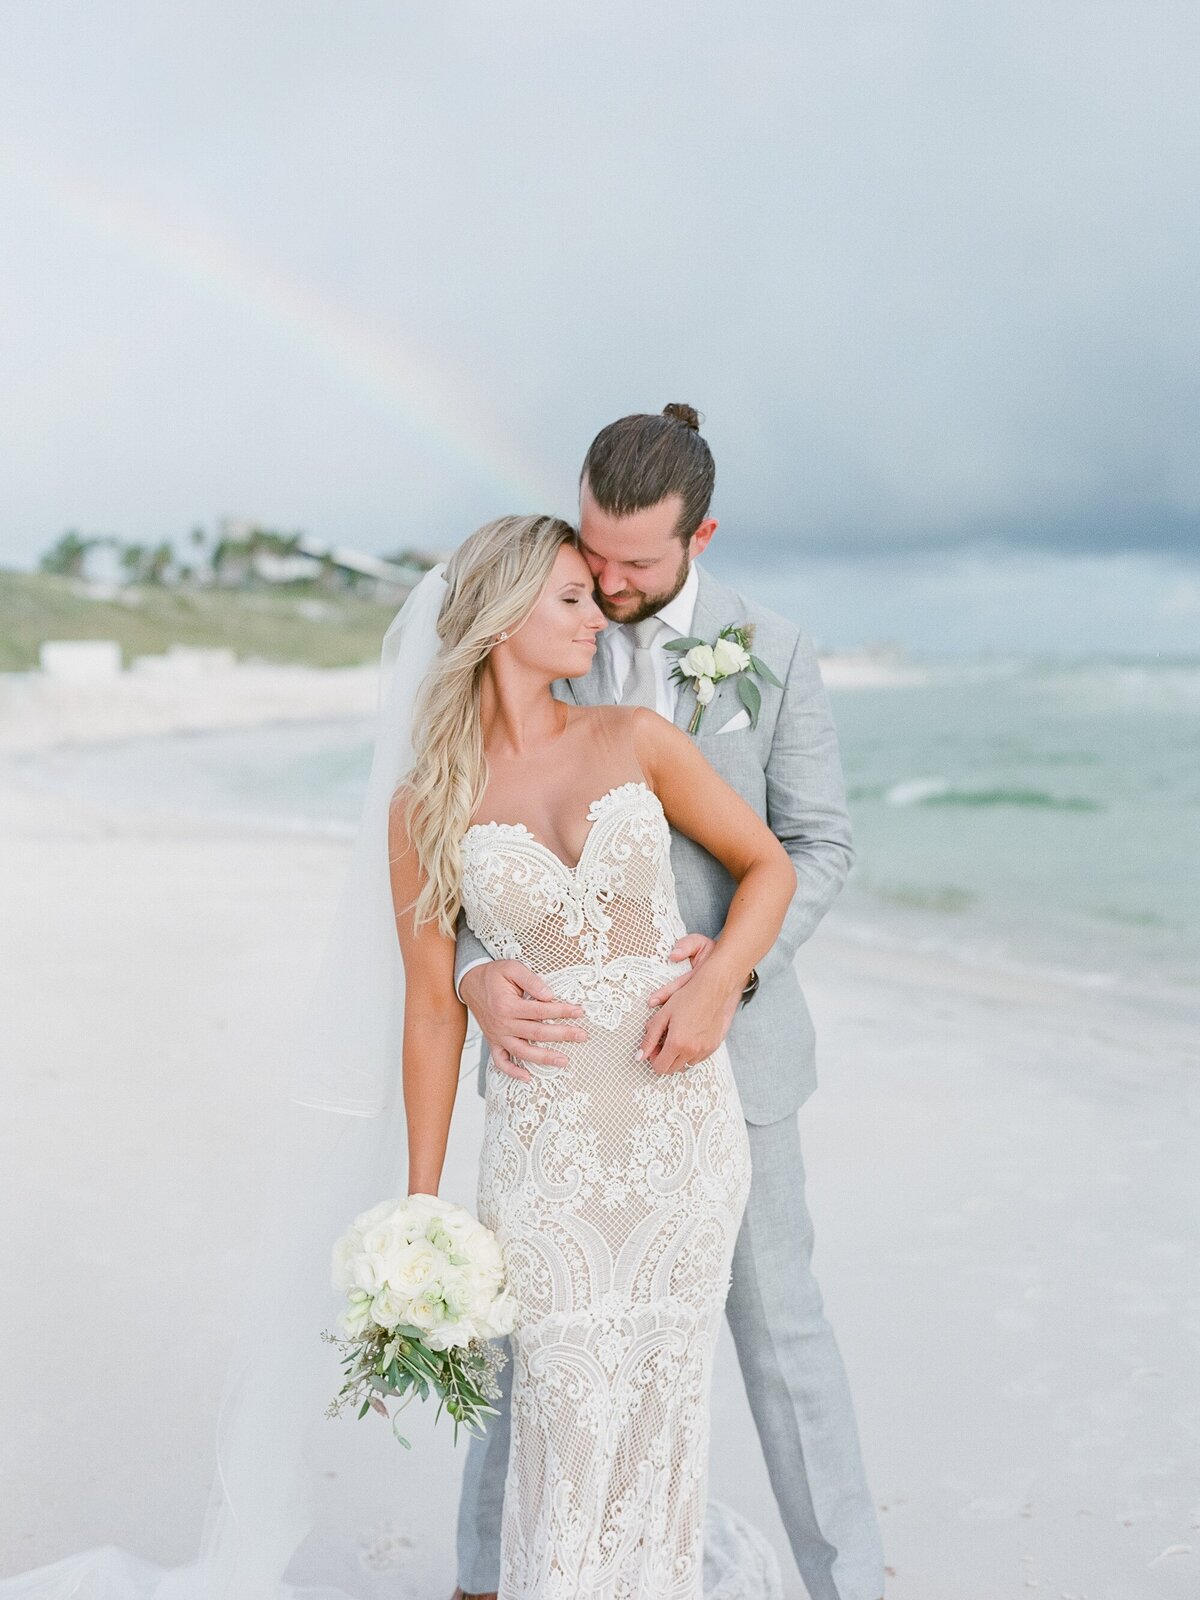 JessieBarksdalePhotography_Alys-and-Rosemary-Beach-Wedding-Photographer_007